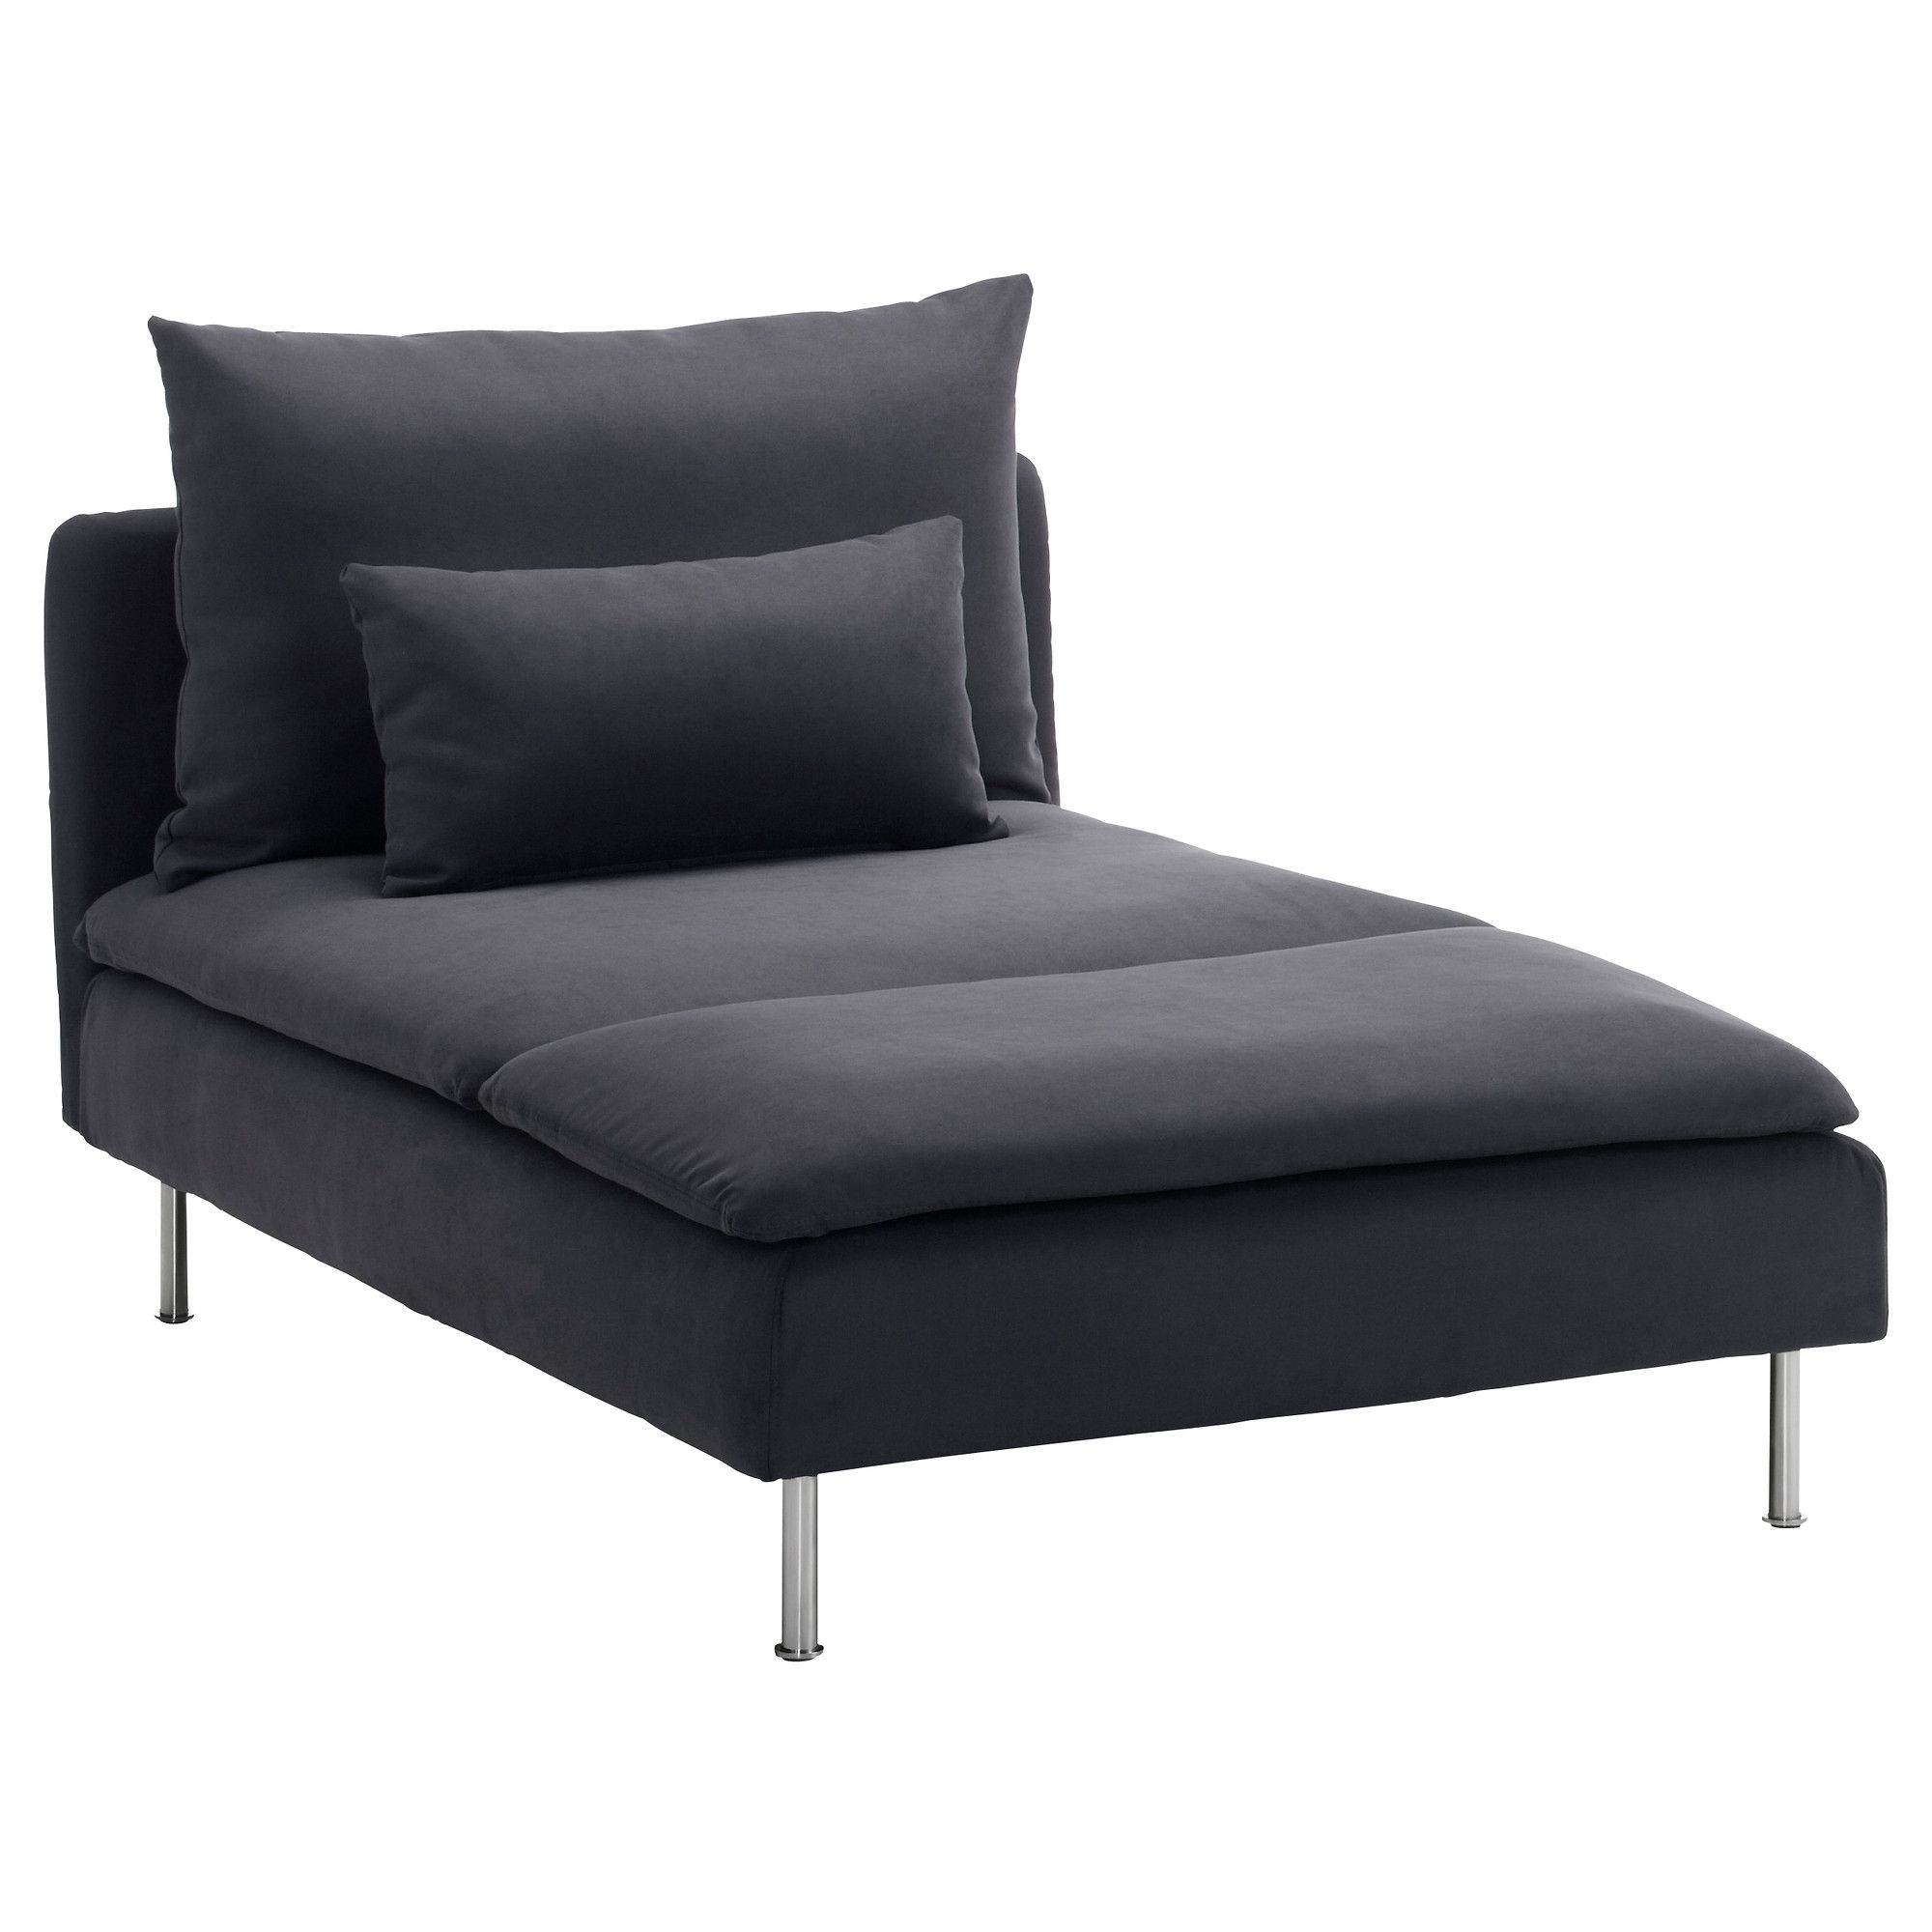 Ikea Chaise Lounge Chairs Regarding Trendy Söderhamn Chaise – Samsta Dark Gray – Ikea (View 4 of 15)